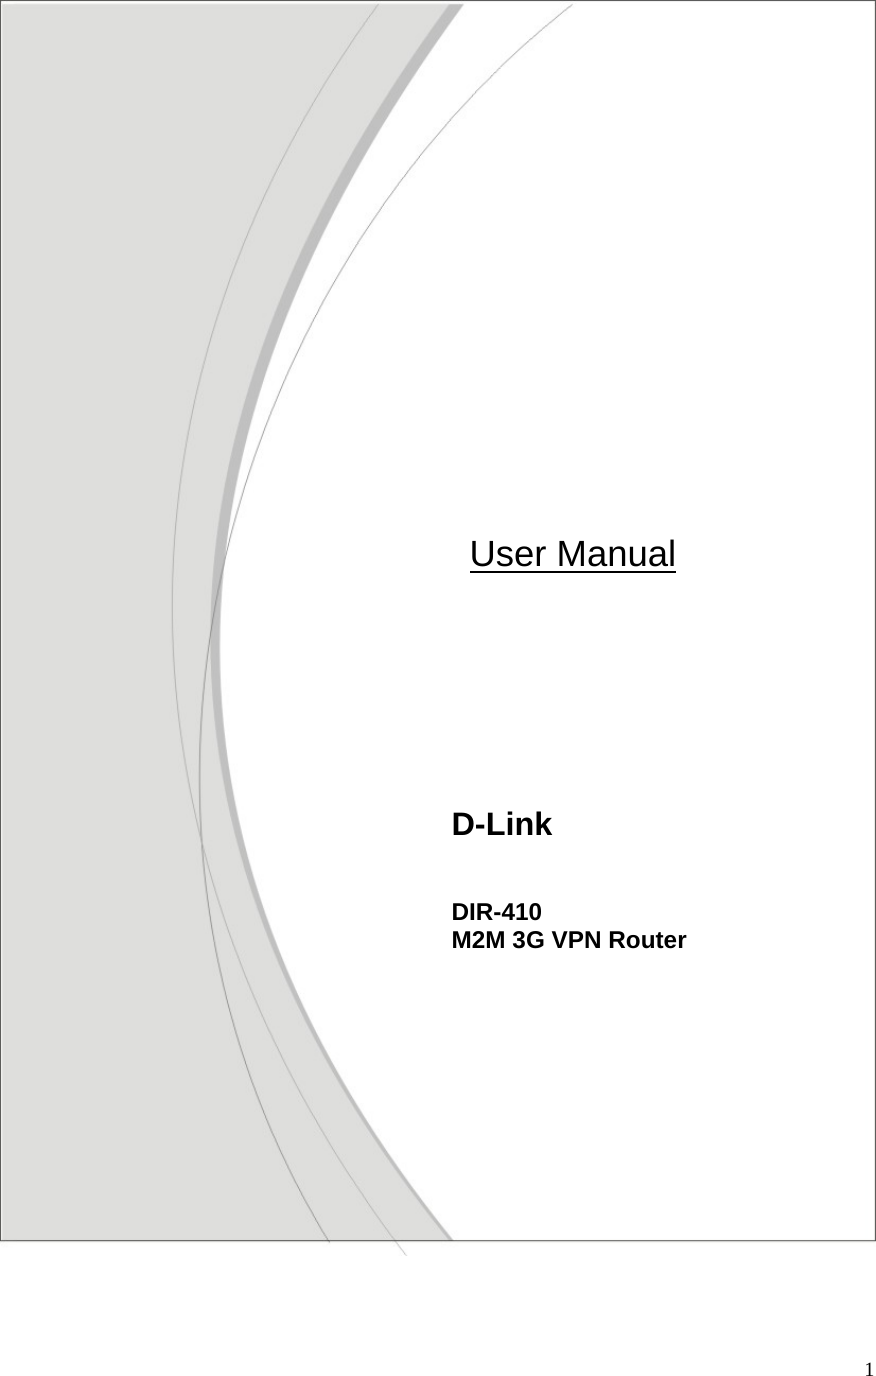  1                                            D-Link   DIR-410  M2M 3G VPN Router                   User Manual 